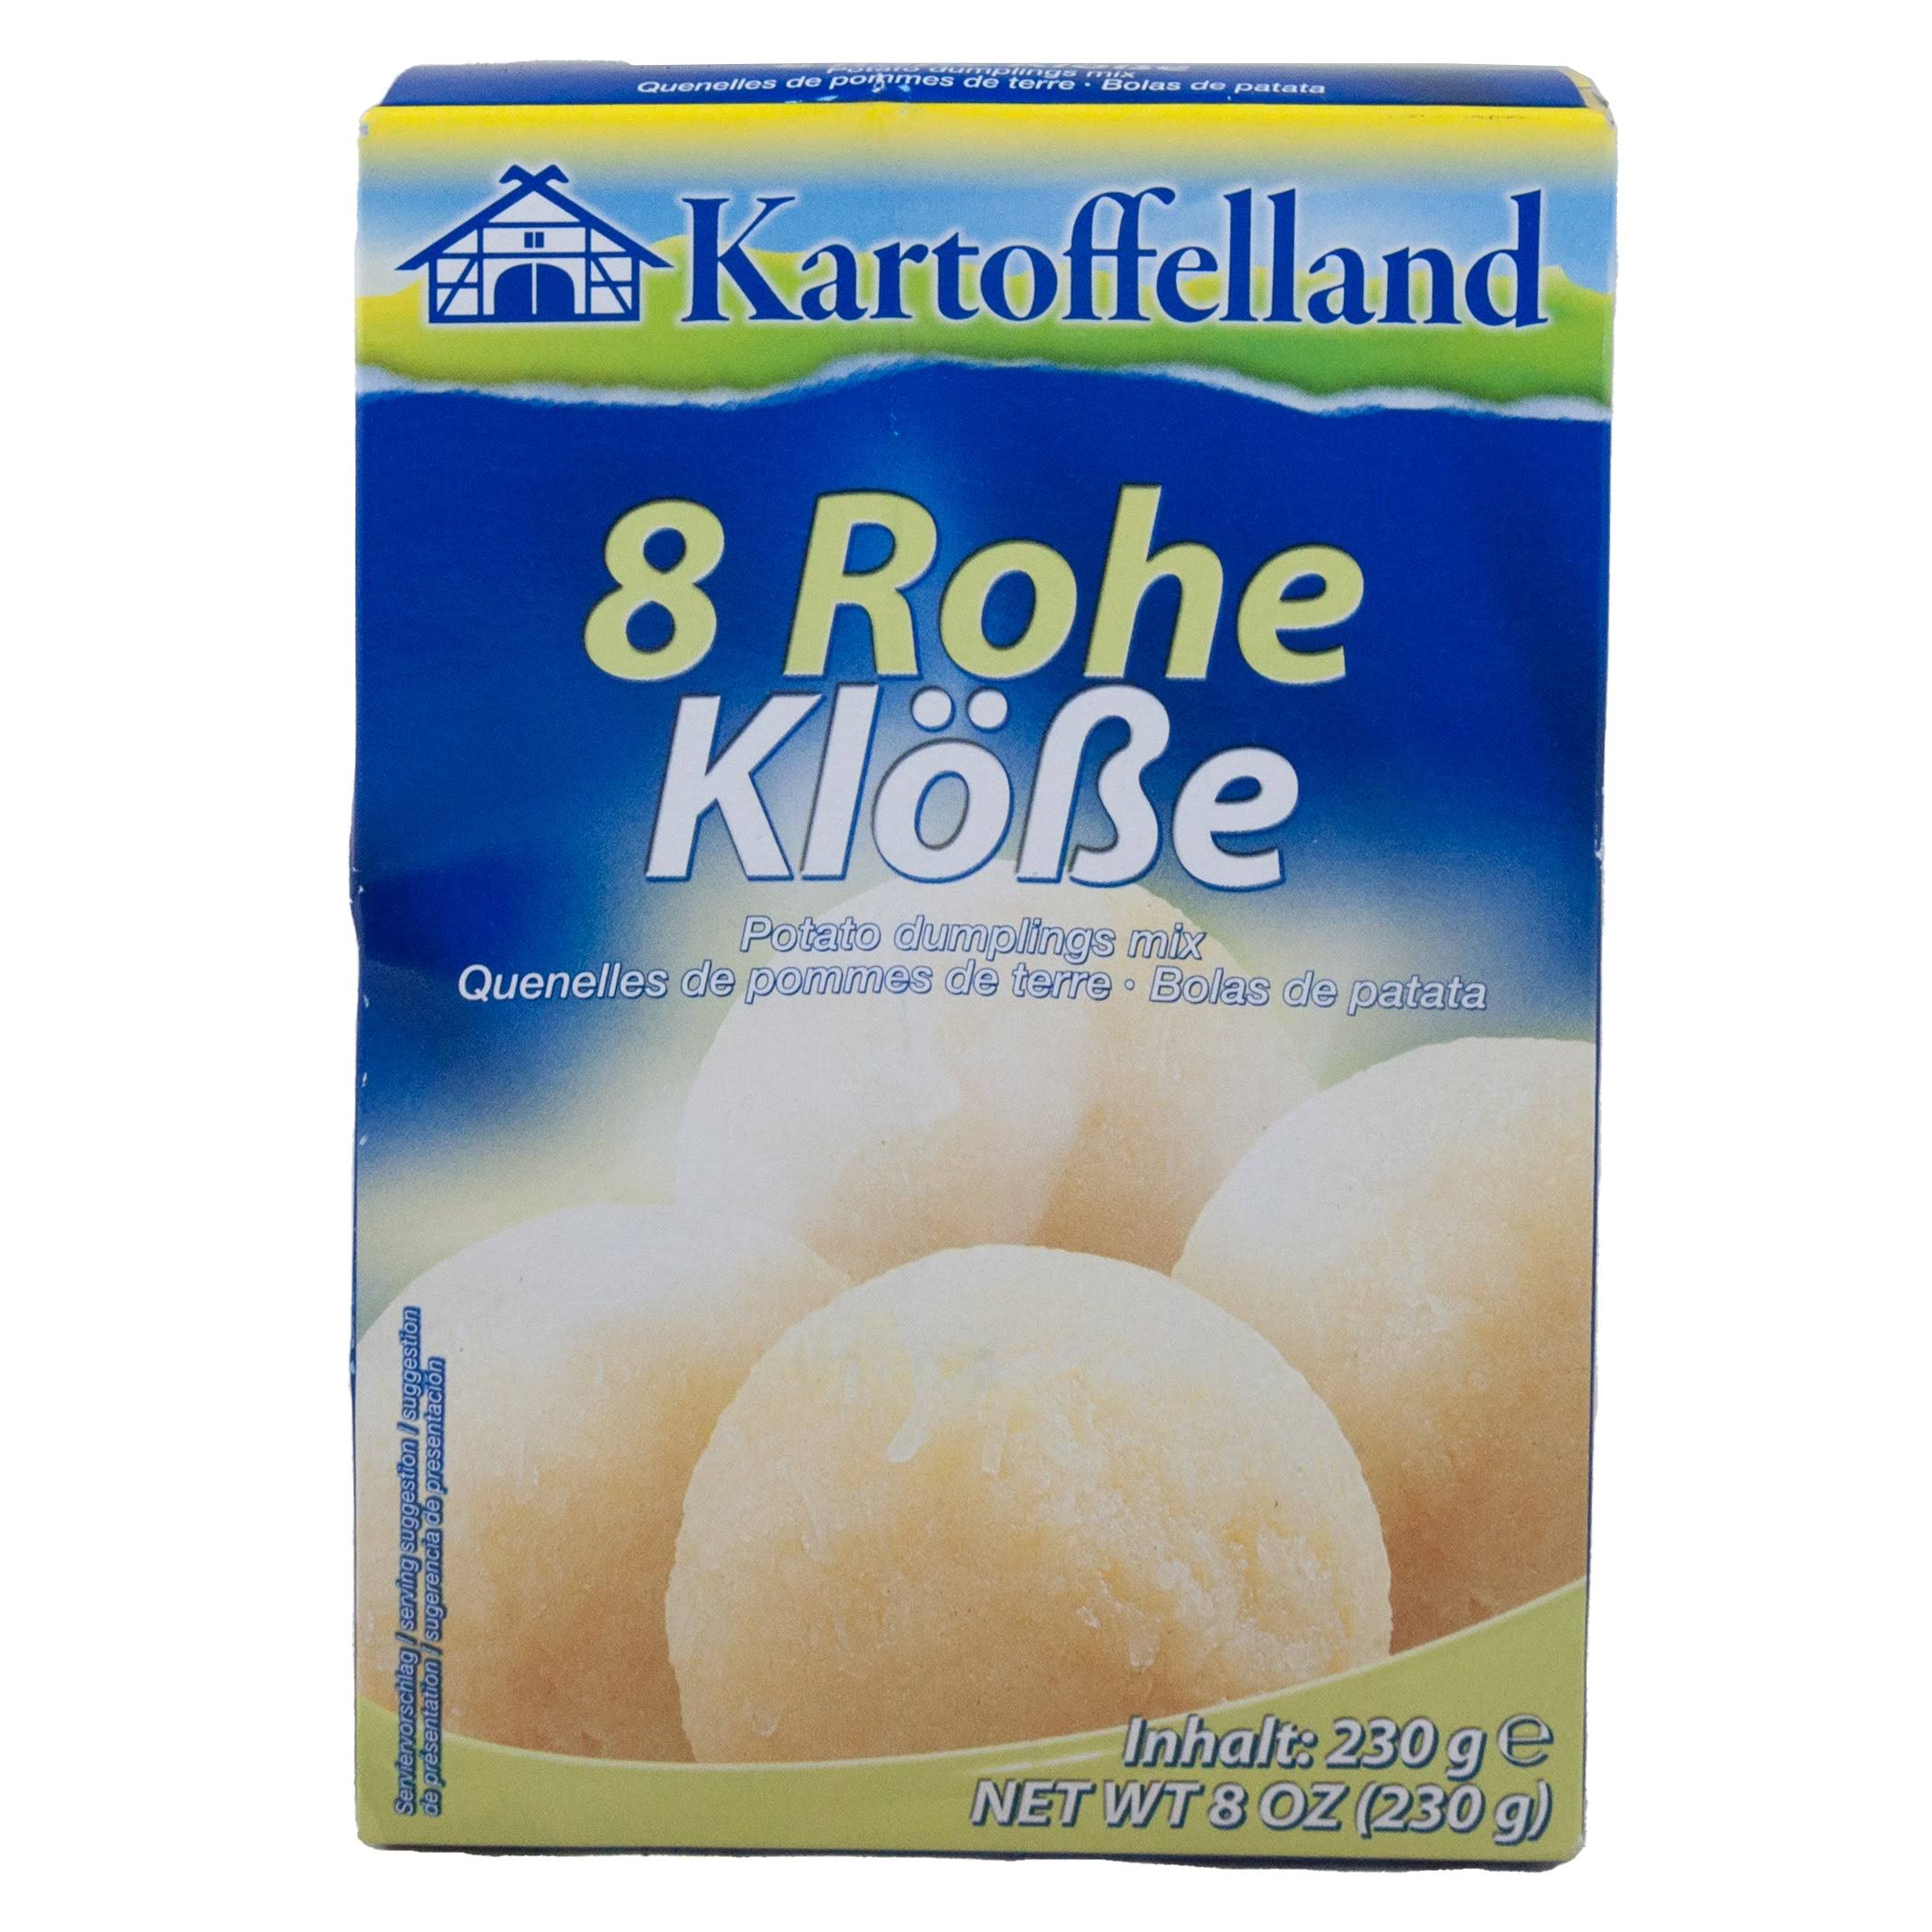 Kartoffelland 8 Rohe Klose (potato dumpling) 230g